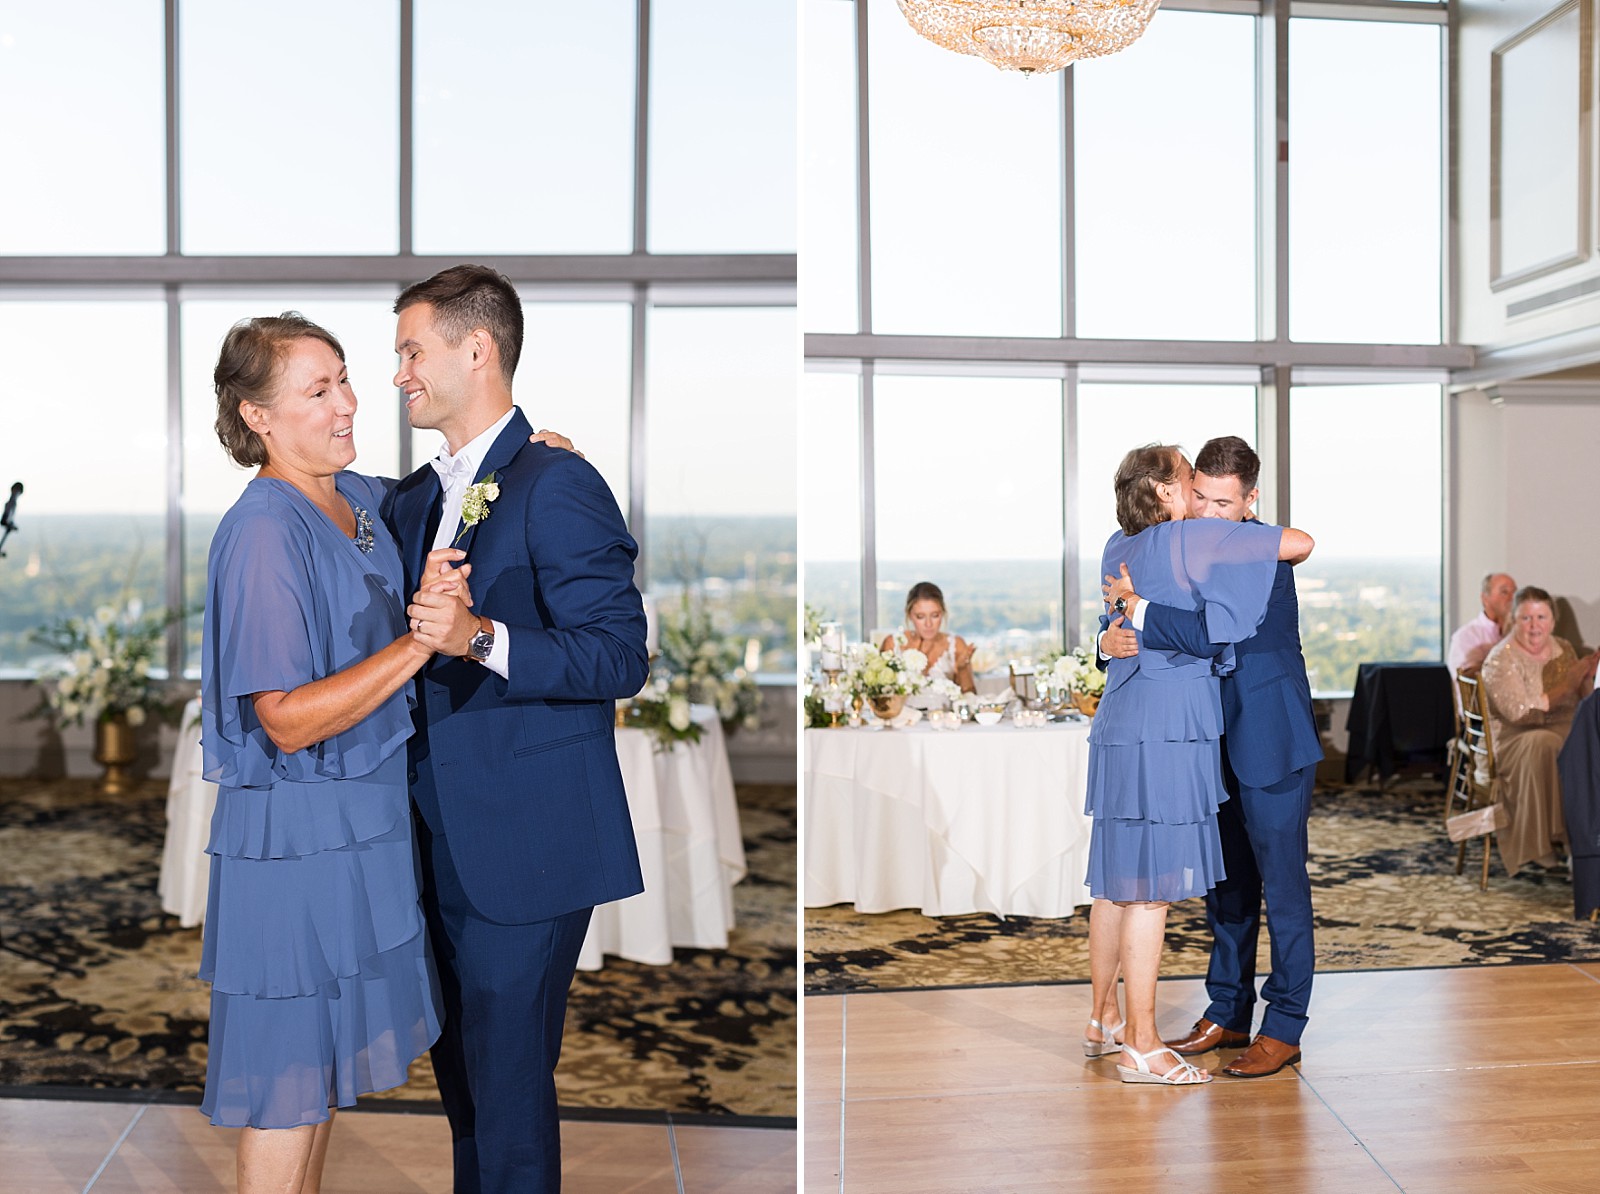 Mother and son dancing | Raleigh Wedding Photographer Sarah Hinckley